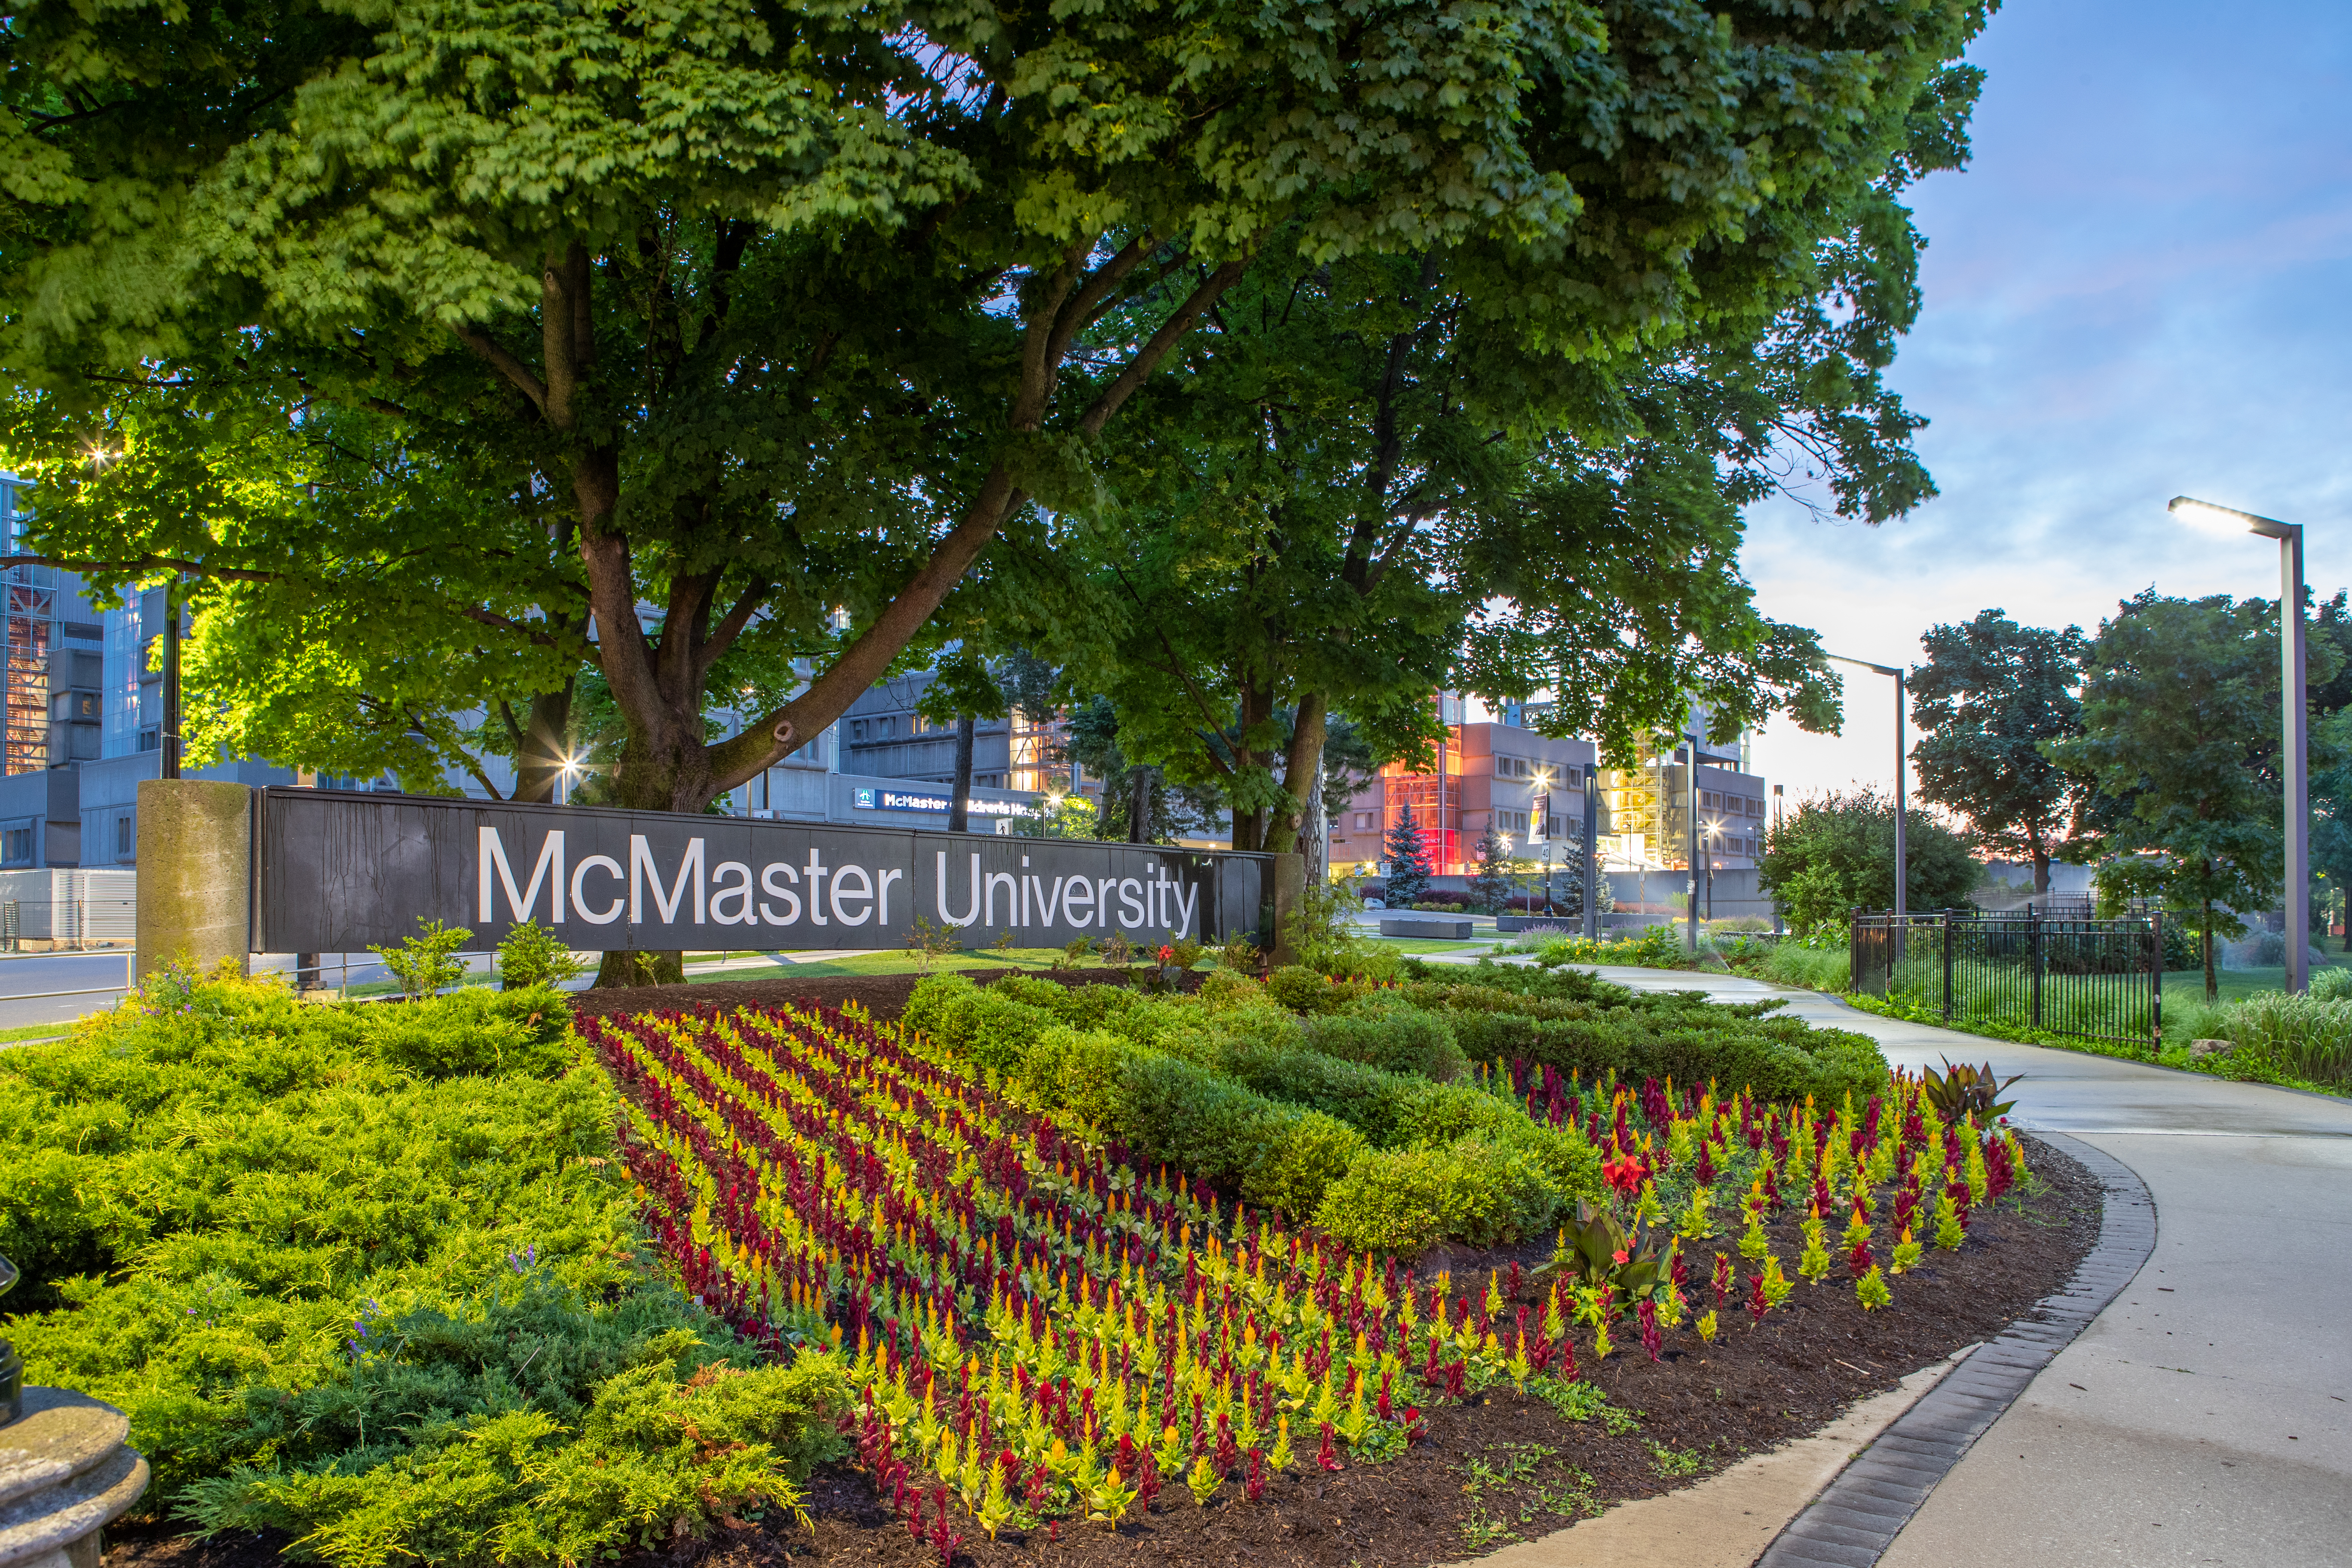 McMaster University main campus sign.